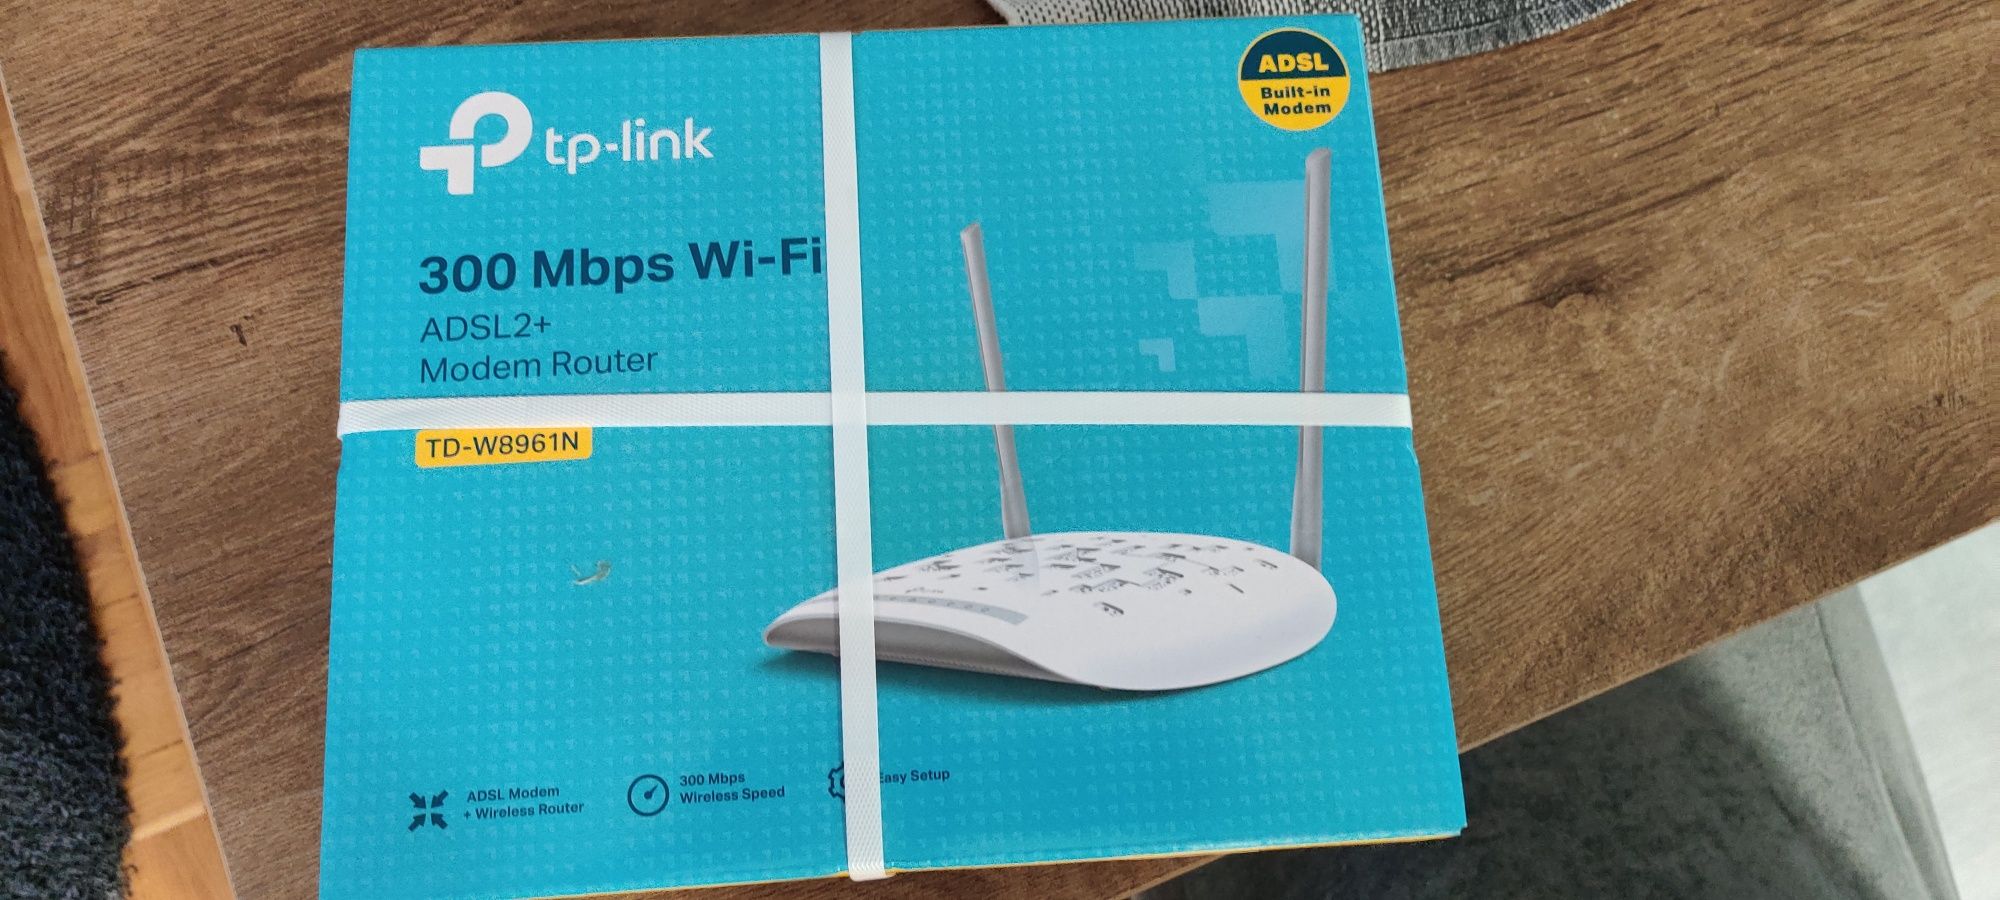 Modem Router WiFi Tp- link  TD-W8961N